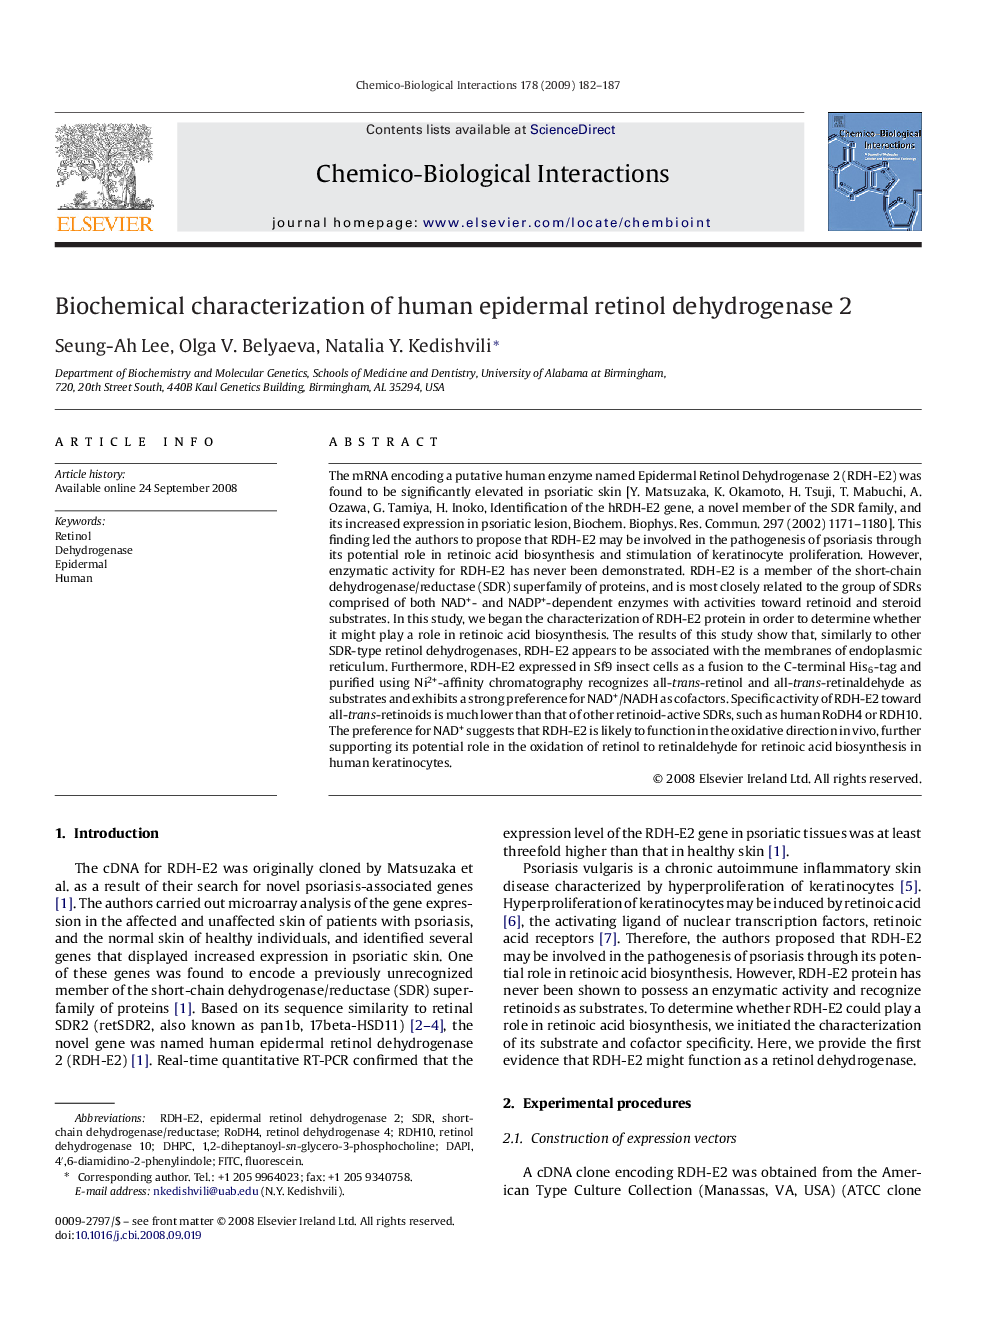 Biochemical characterization of human epidermal retinol dehydrogenase 2